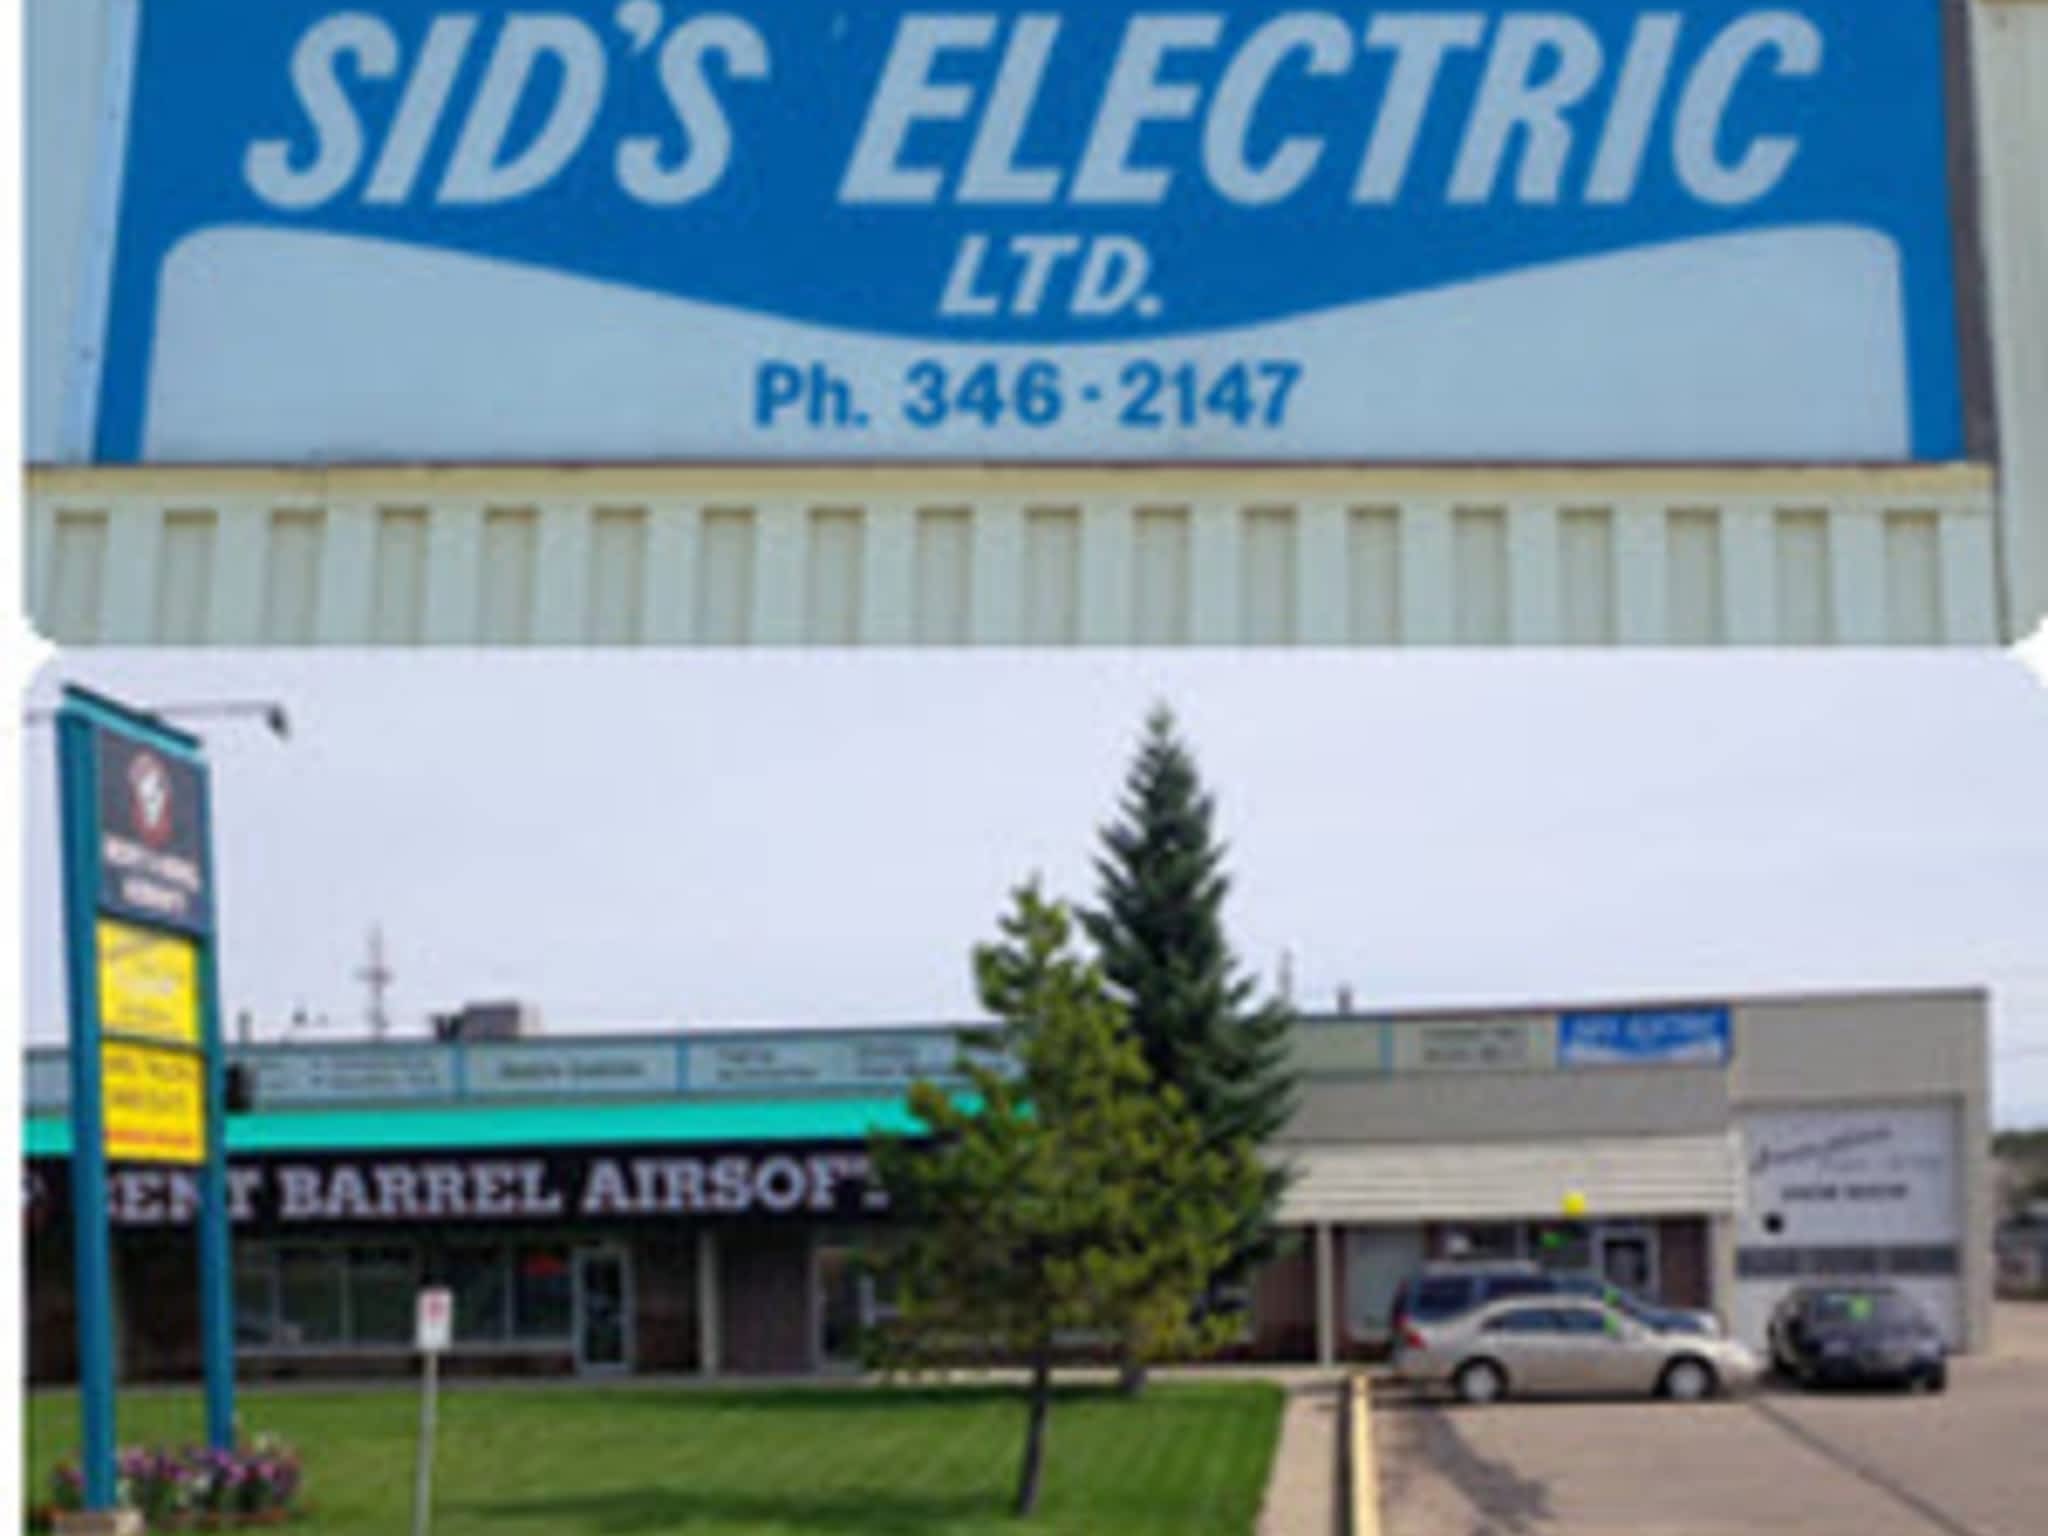 photo Sid's Electric (Rd) Ltd